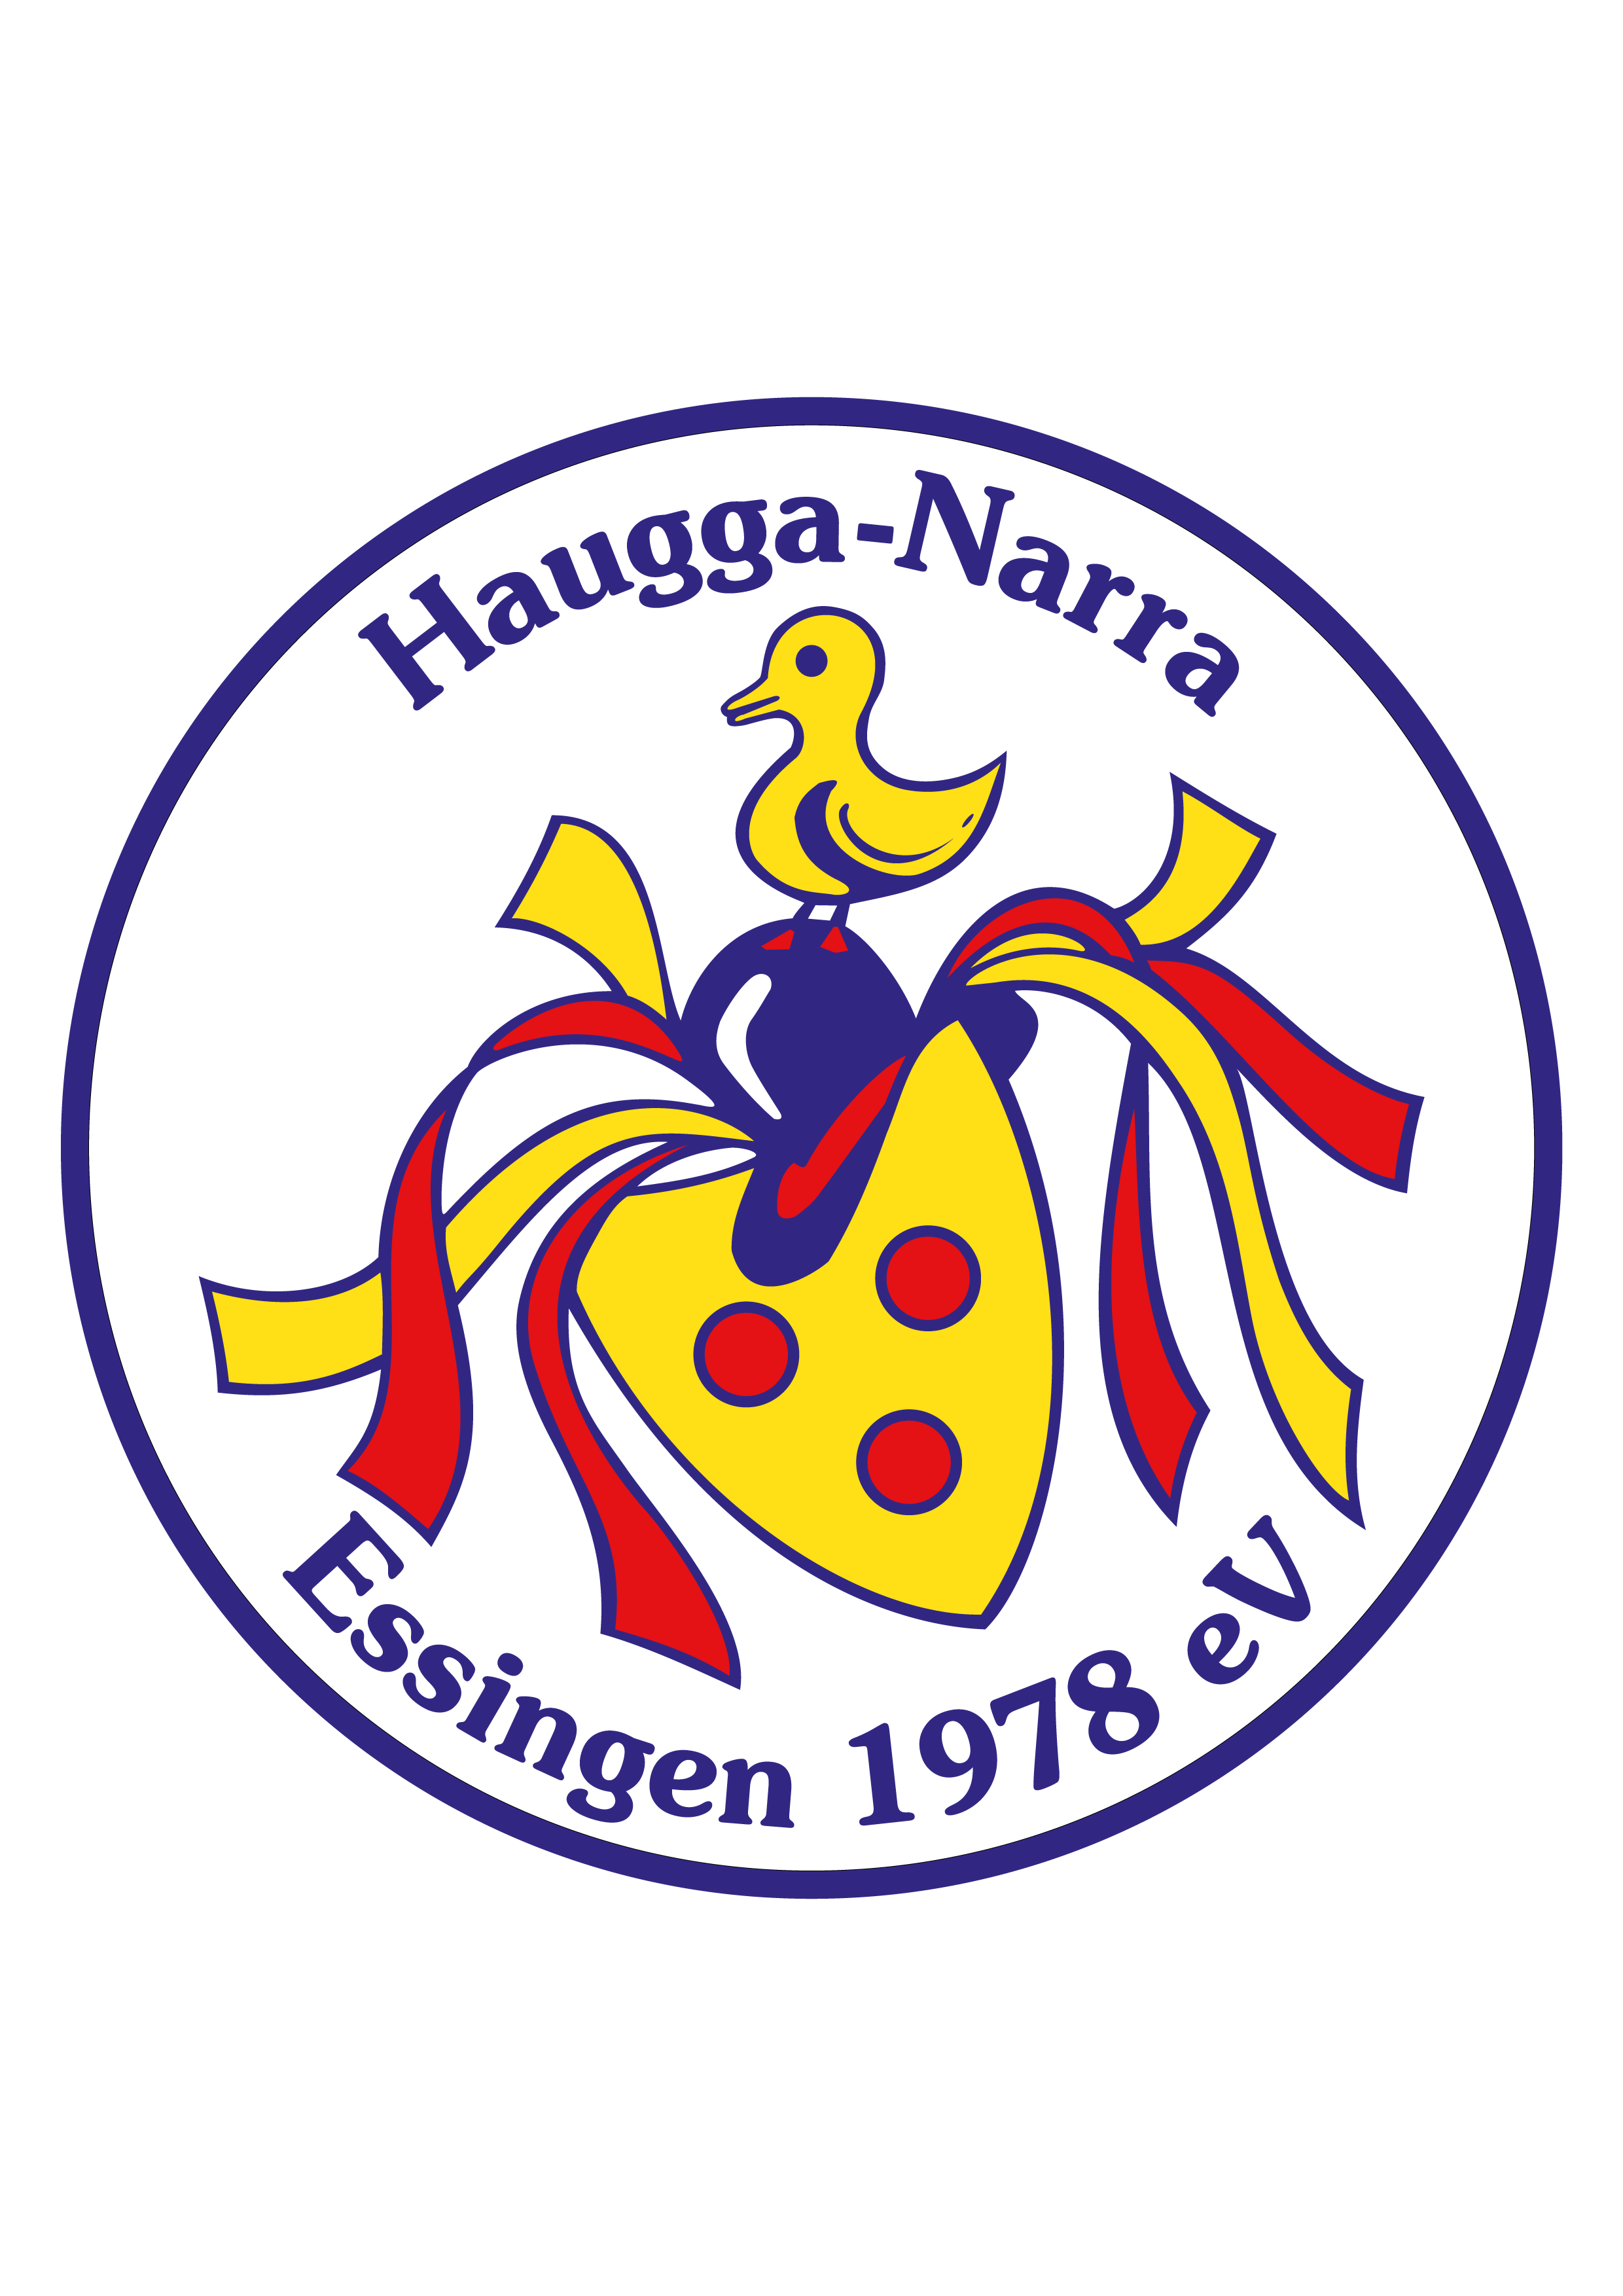 Karnevalvereinigung Haugga Narra Essingen 1978 e.V.